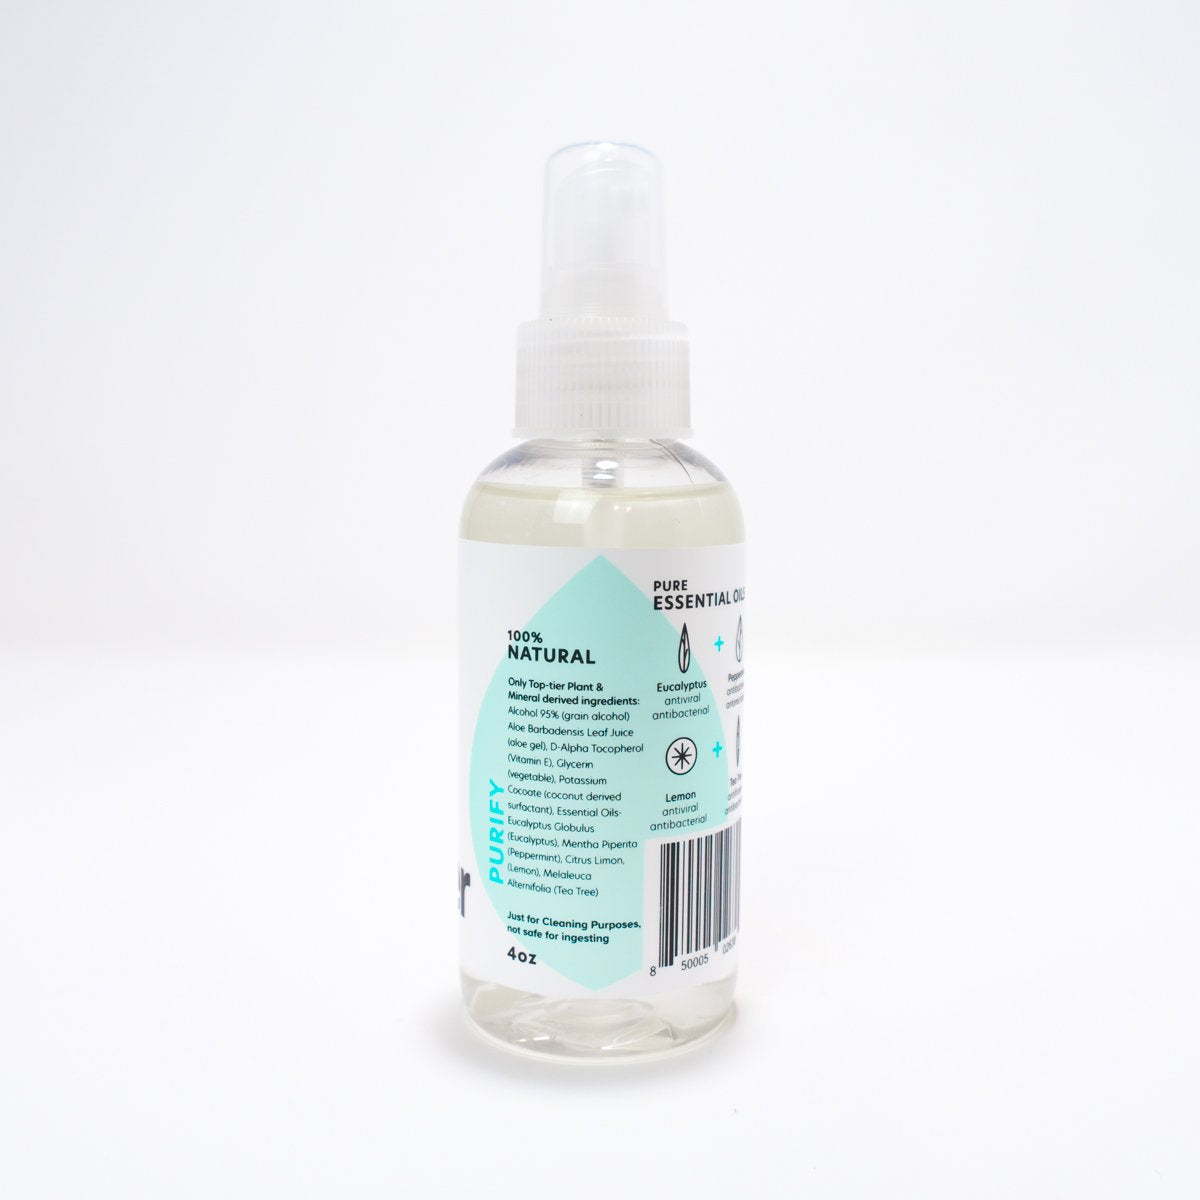 Refillable Hand Sanitizer (4oz) - Purify Blend